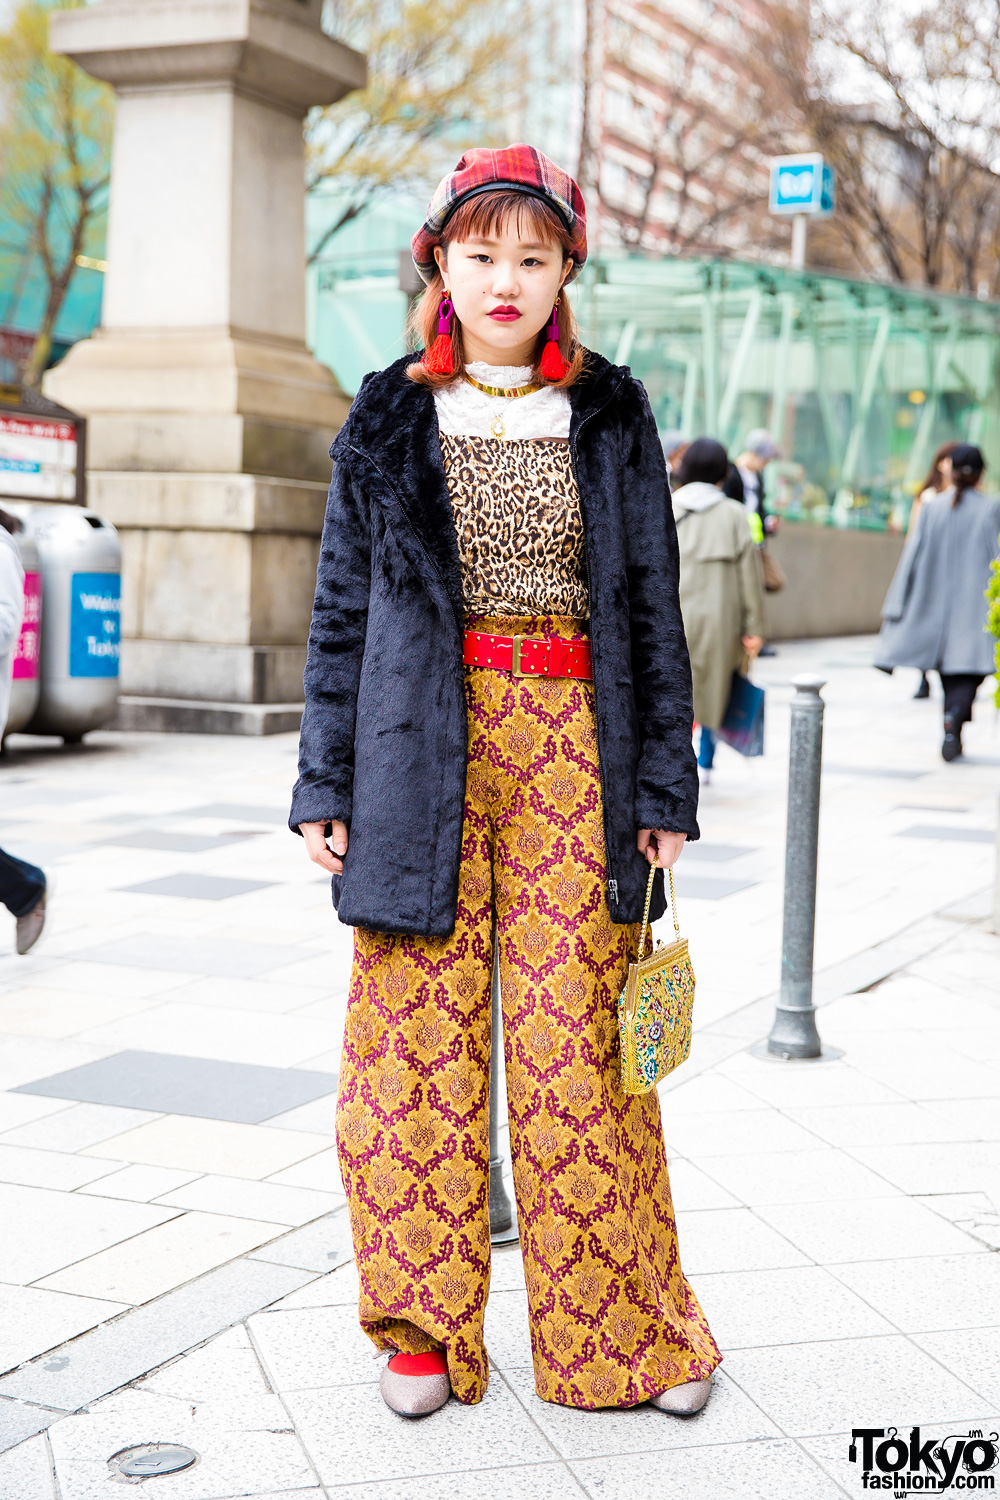 Vintage Harajuku Street Style w/ Mixed Prints, Furry Jacket, Tassel Earrings & Glitter Mary Jane Flats